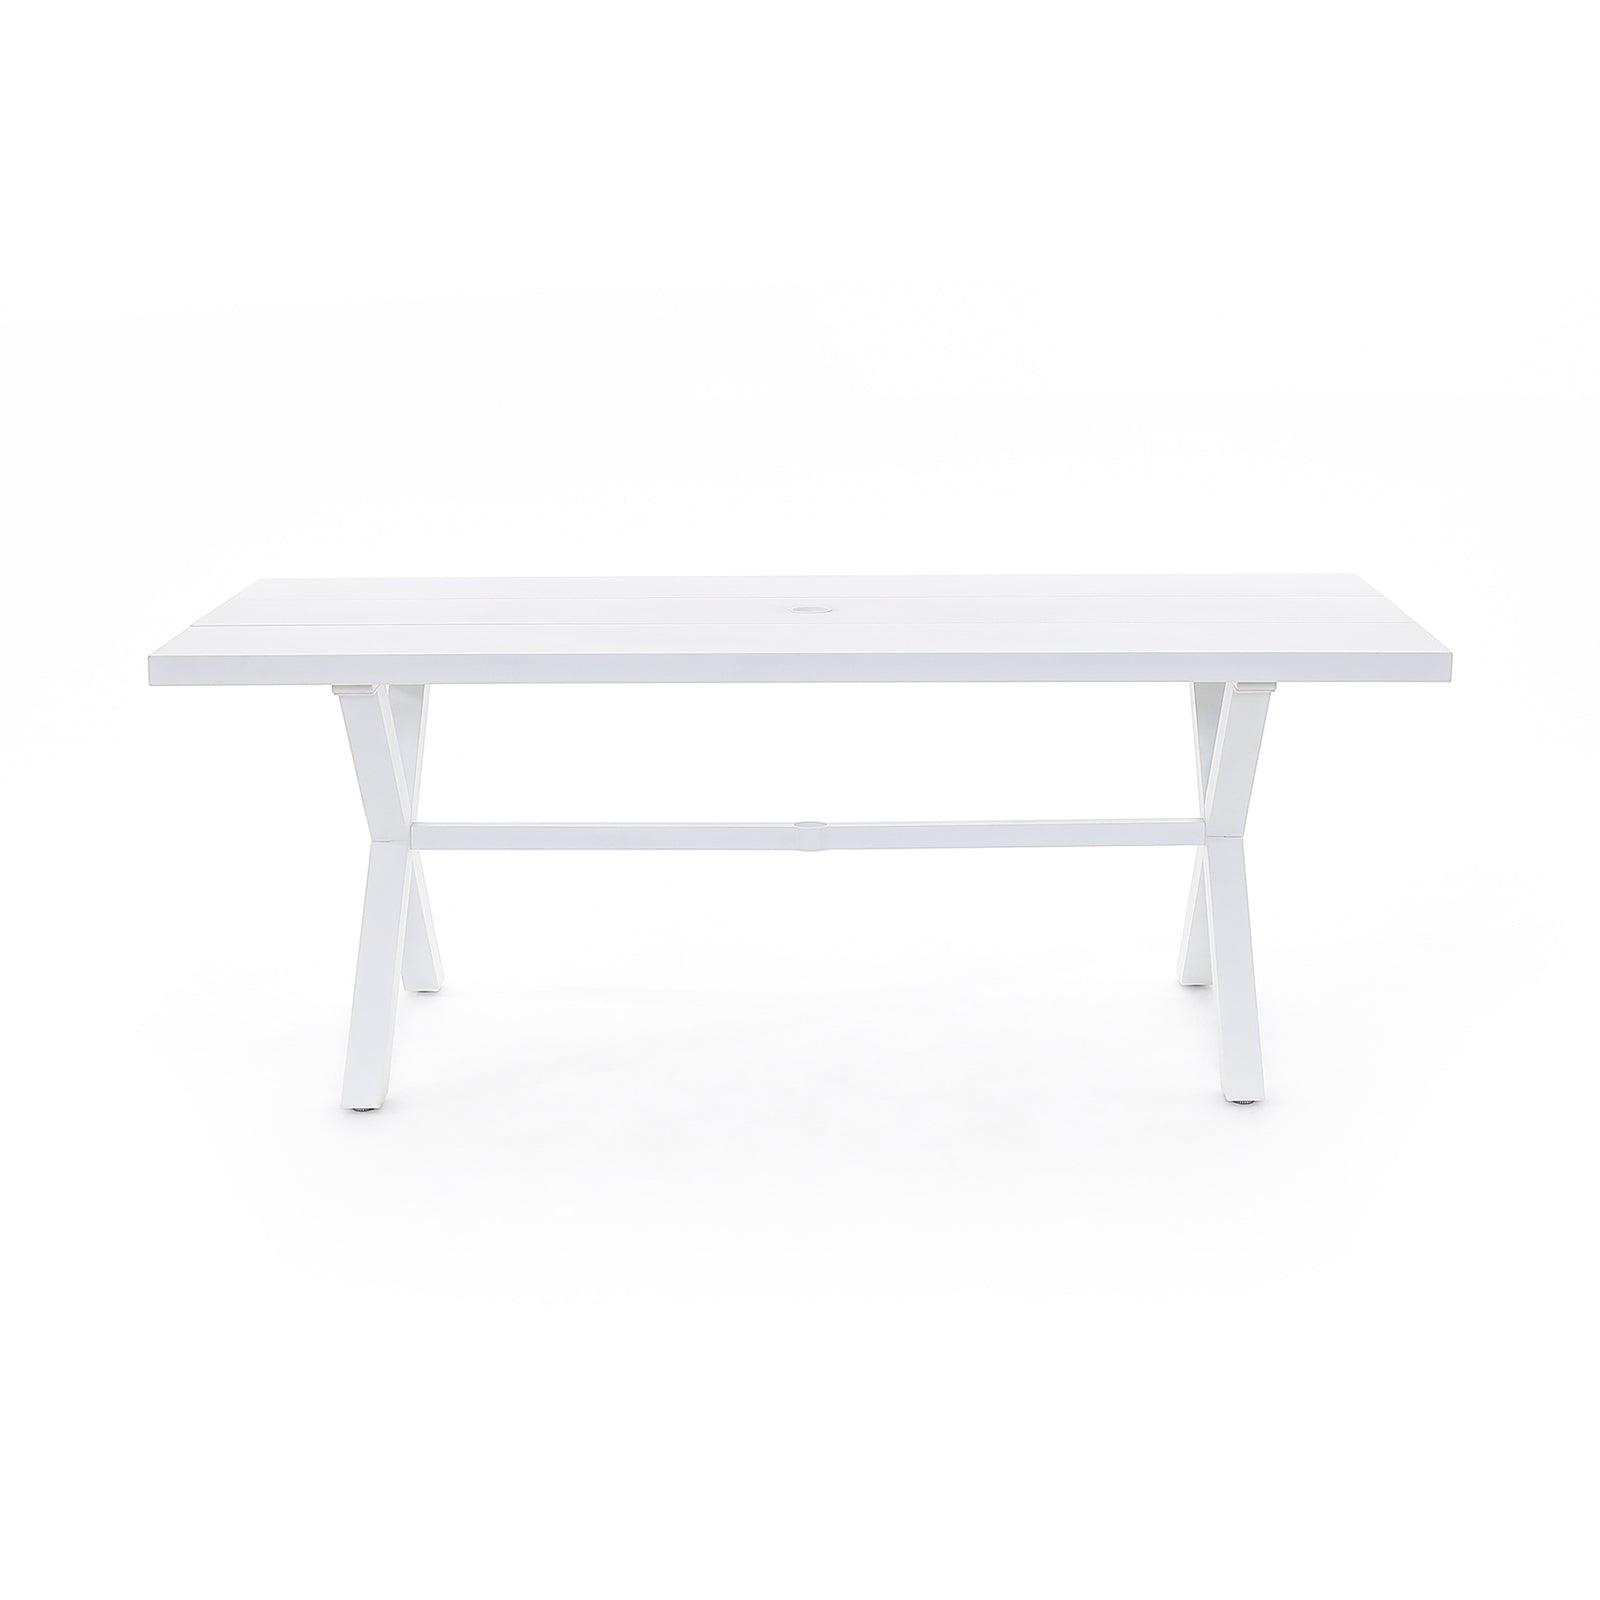 Salina White Aluminum Rectangular Dining Table for 8 with Umbrella Hole, X-Shaped Leg Design - Jardina Furniture#color_White